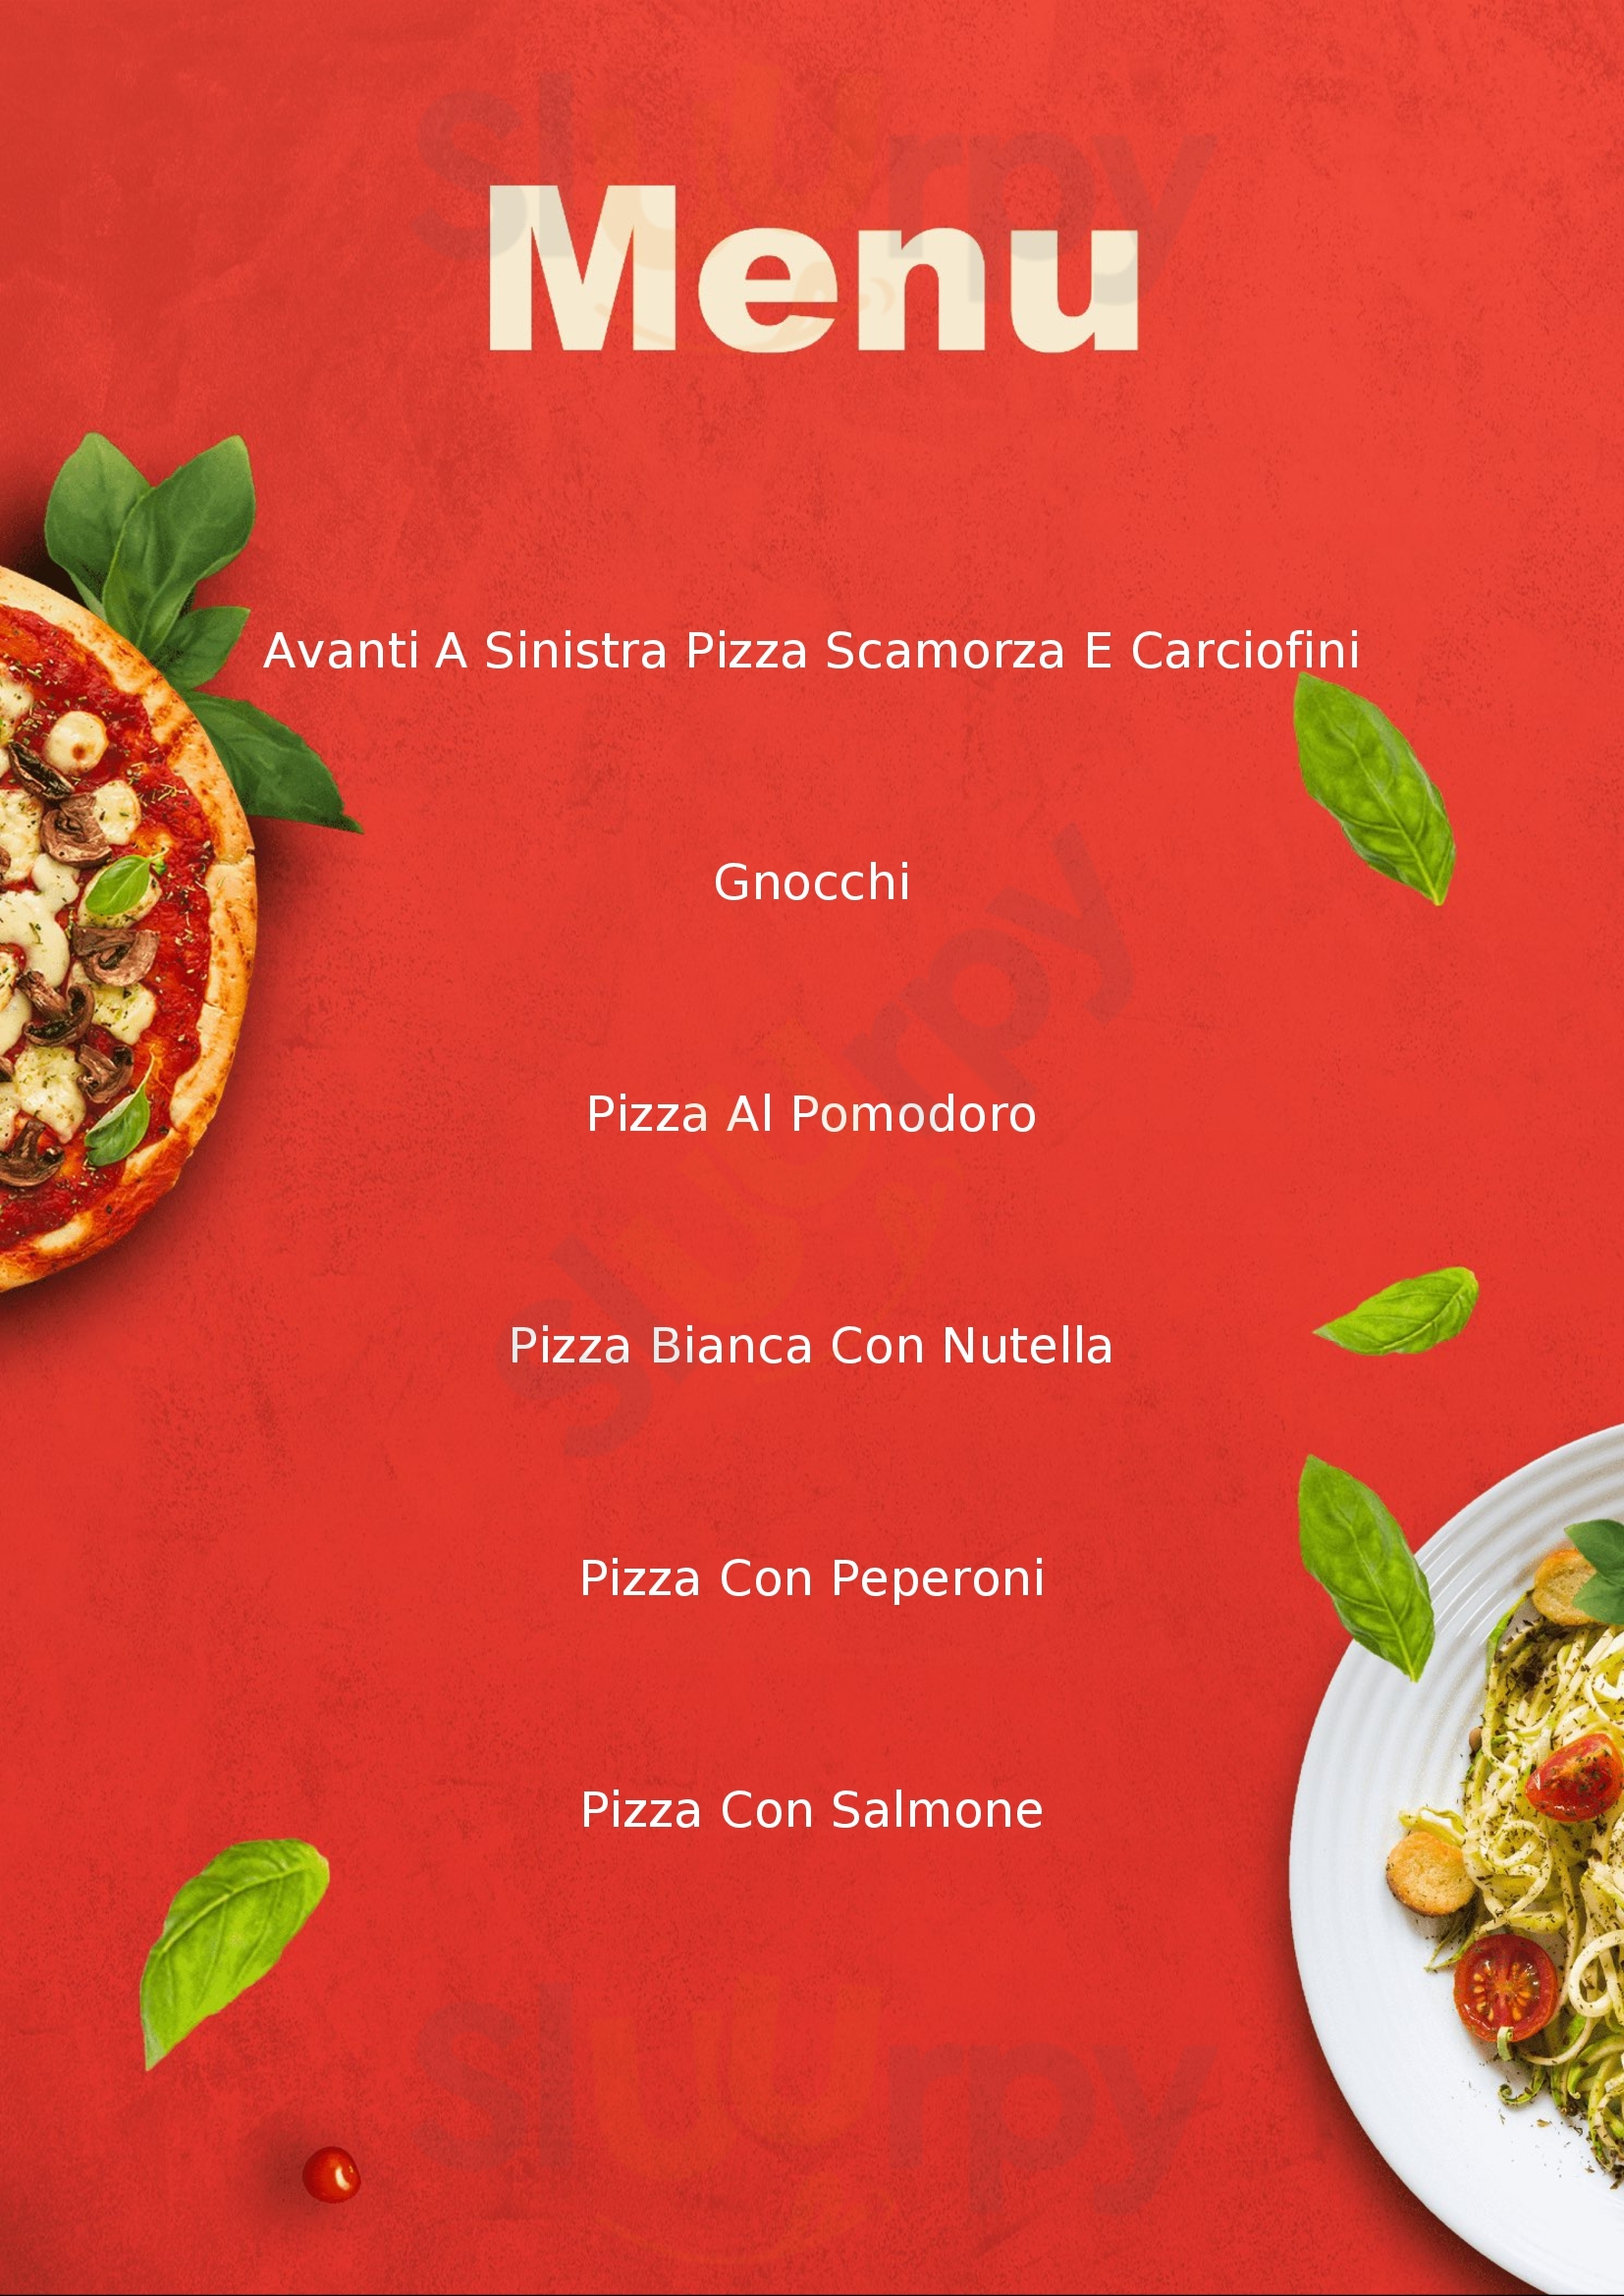 Pizza Rustica Via Flaminia Roma menù 1 pagina